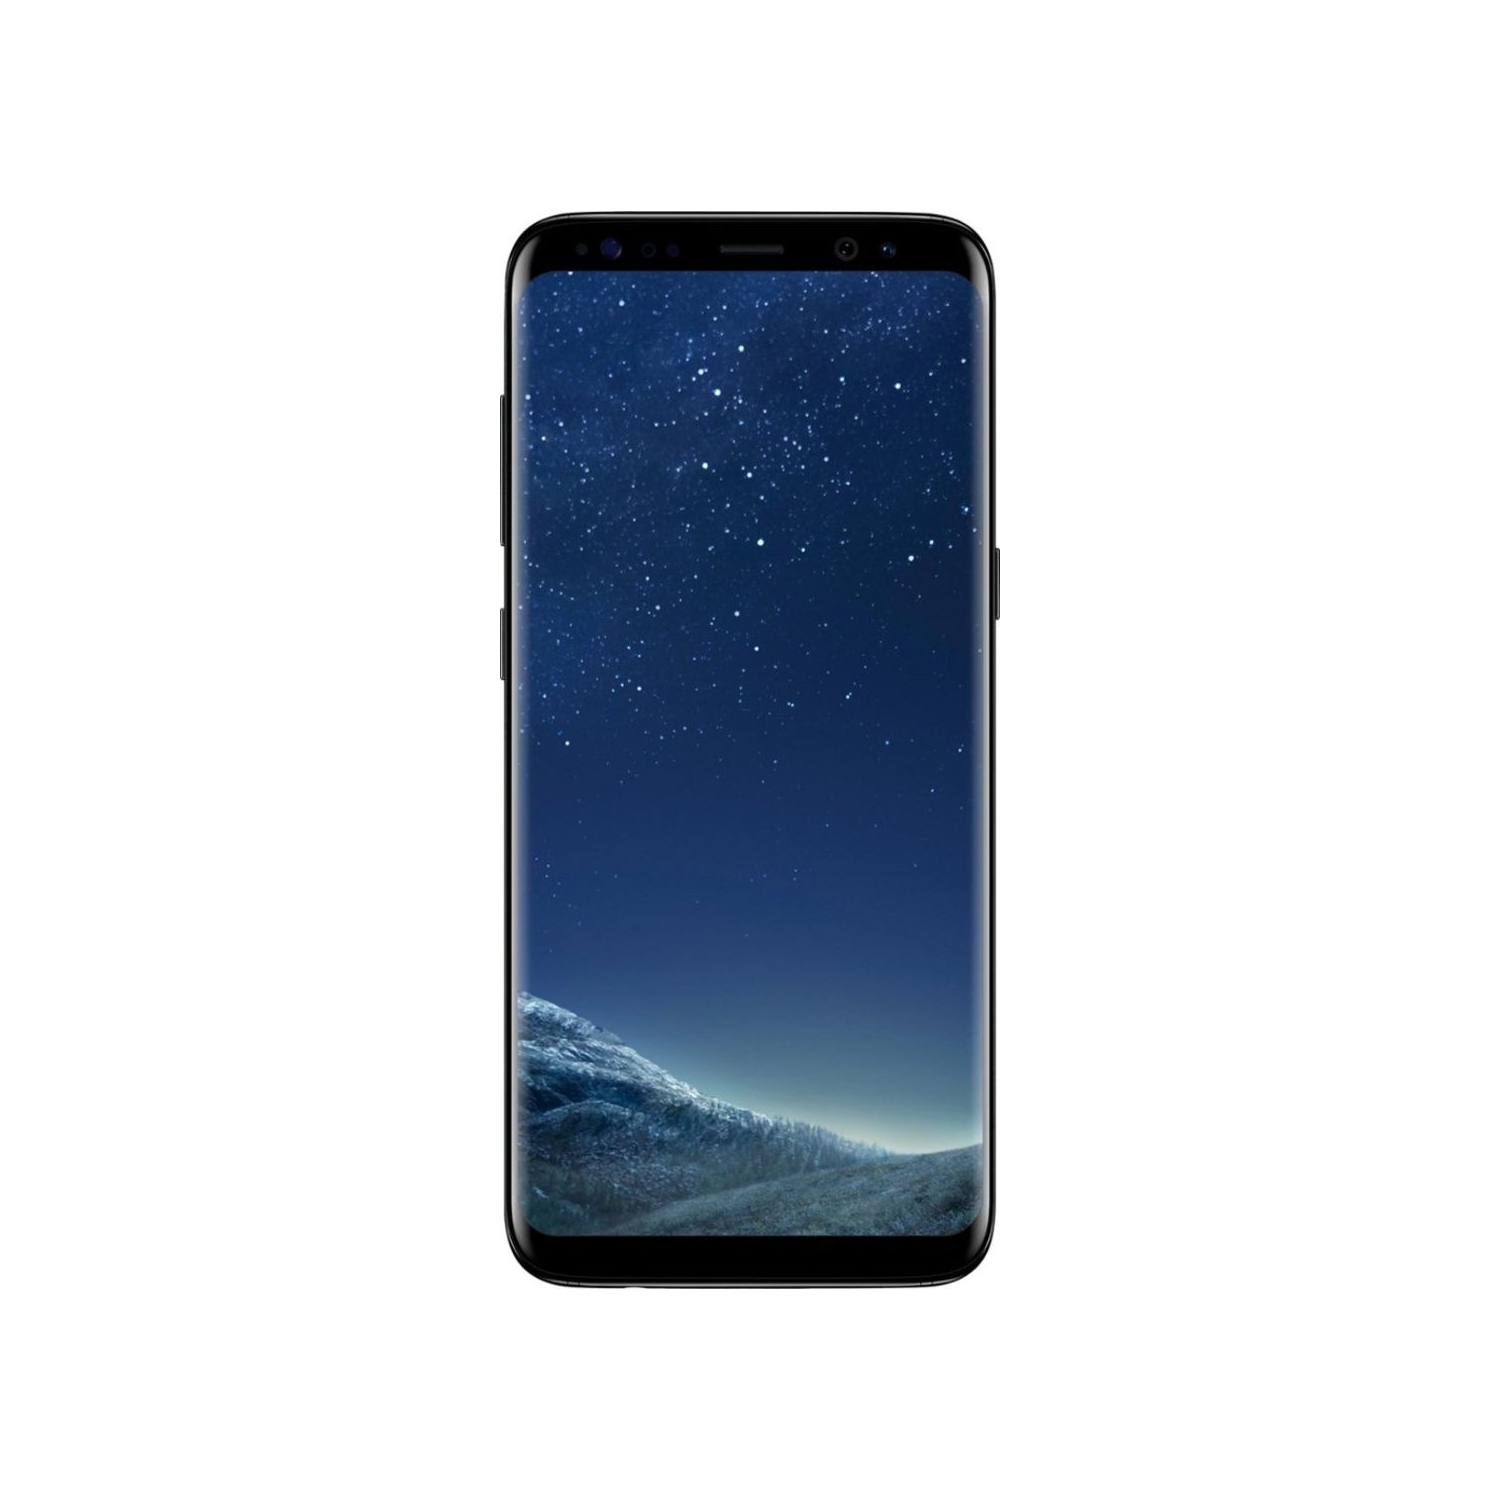 Samsung Galaxy S8 64GB Smartphone - Midnight Black - Unlocked - Open Box